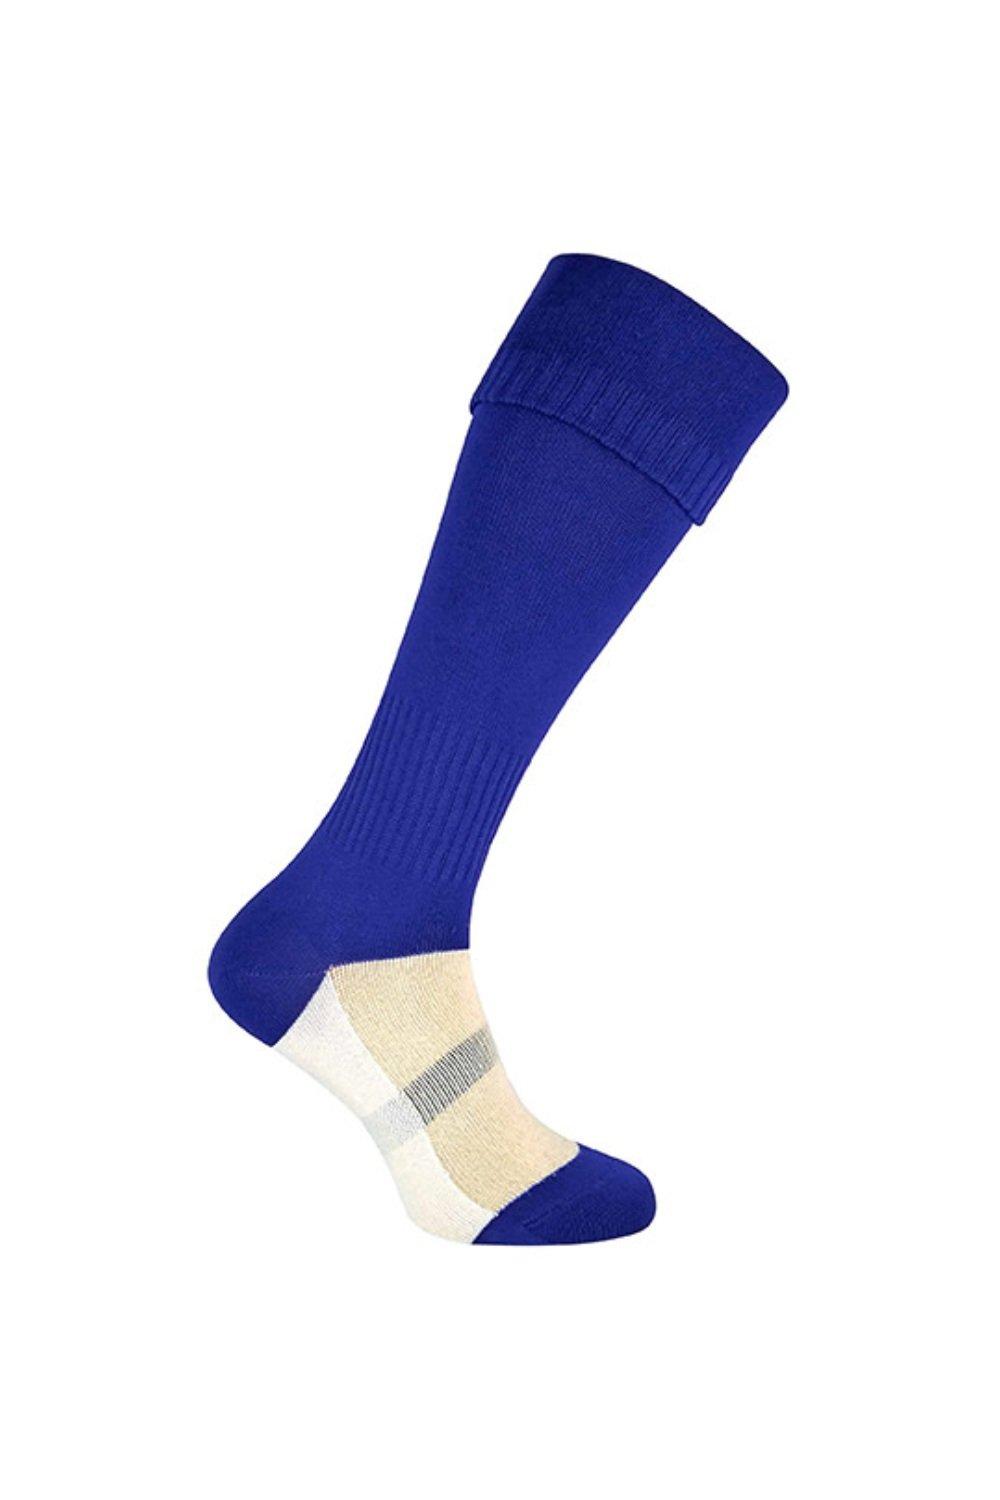 Спортивные носки до колена для футбола/хоккея/регби ROLY, синий